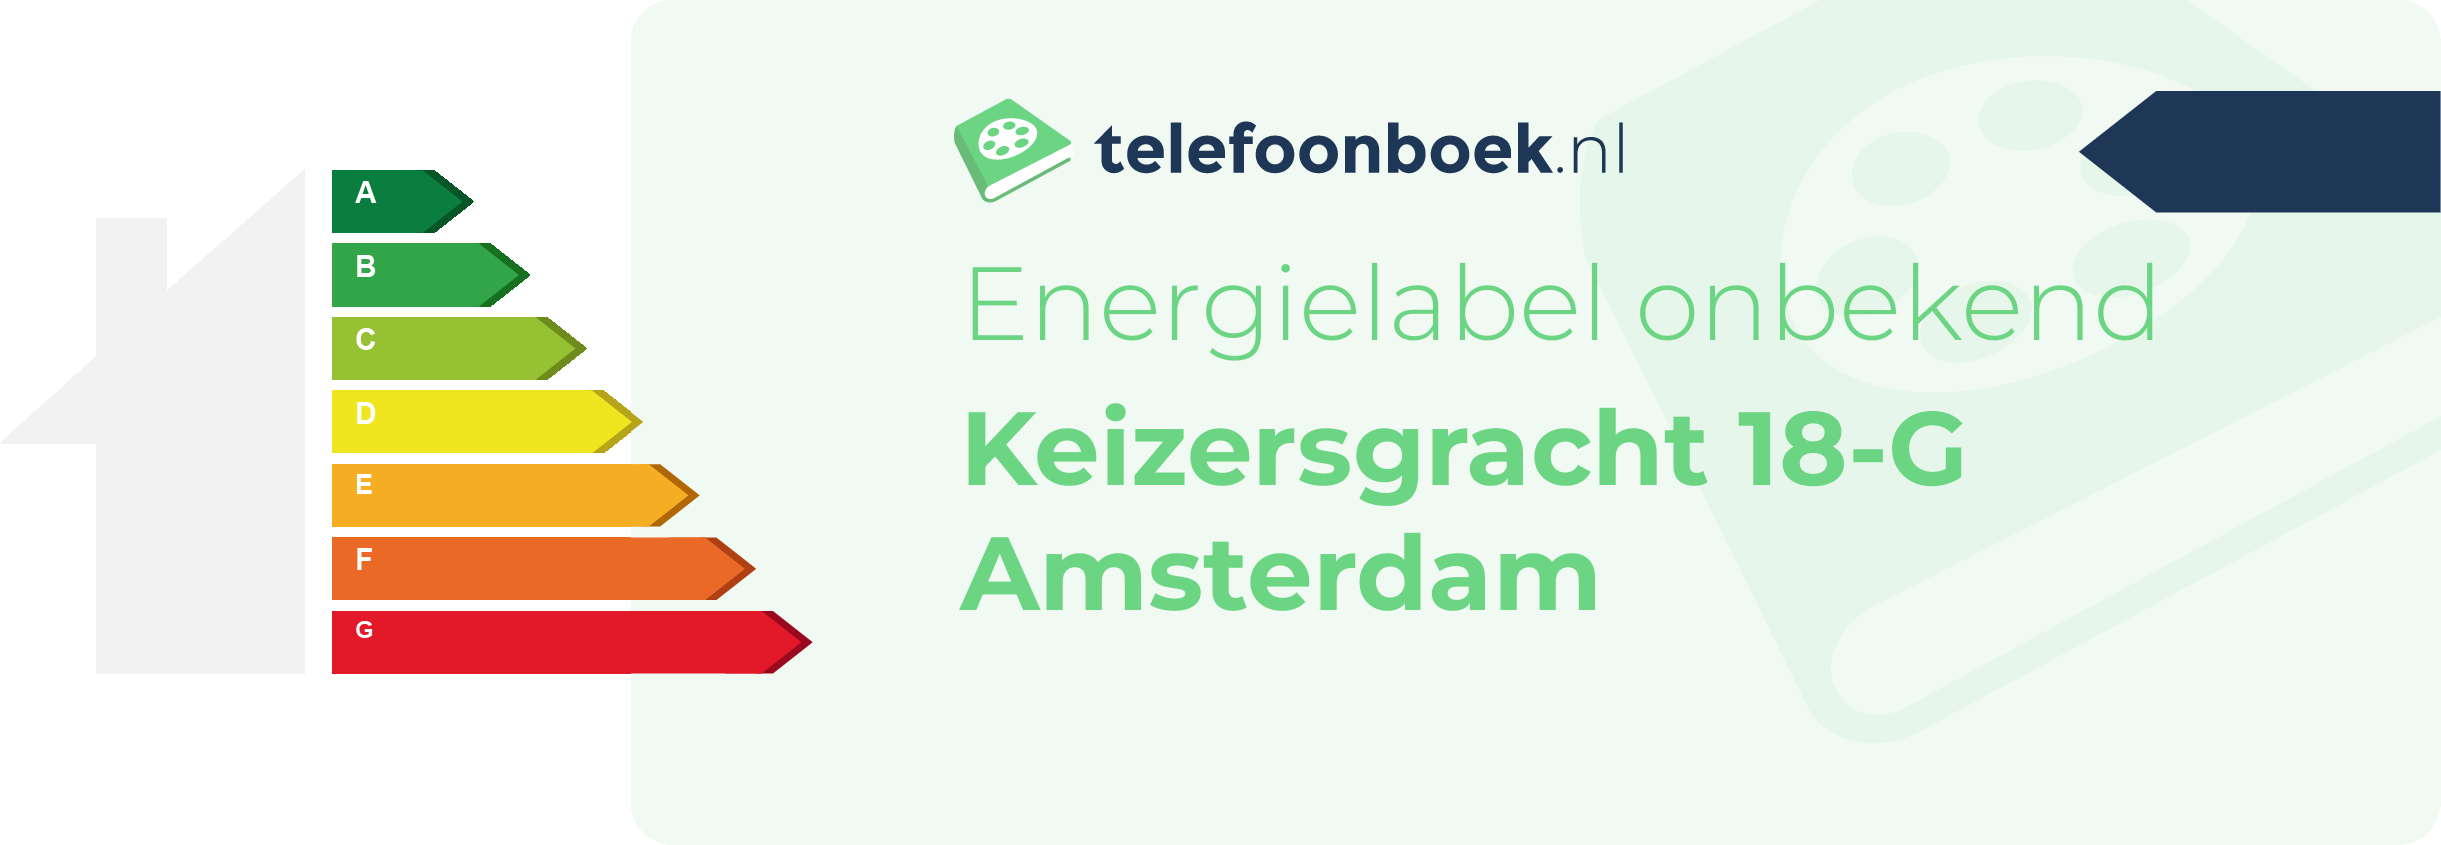 Energielabel Keizersgracht 18-G Amsterdam